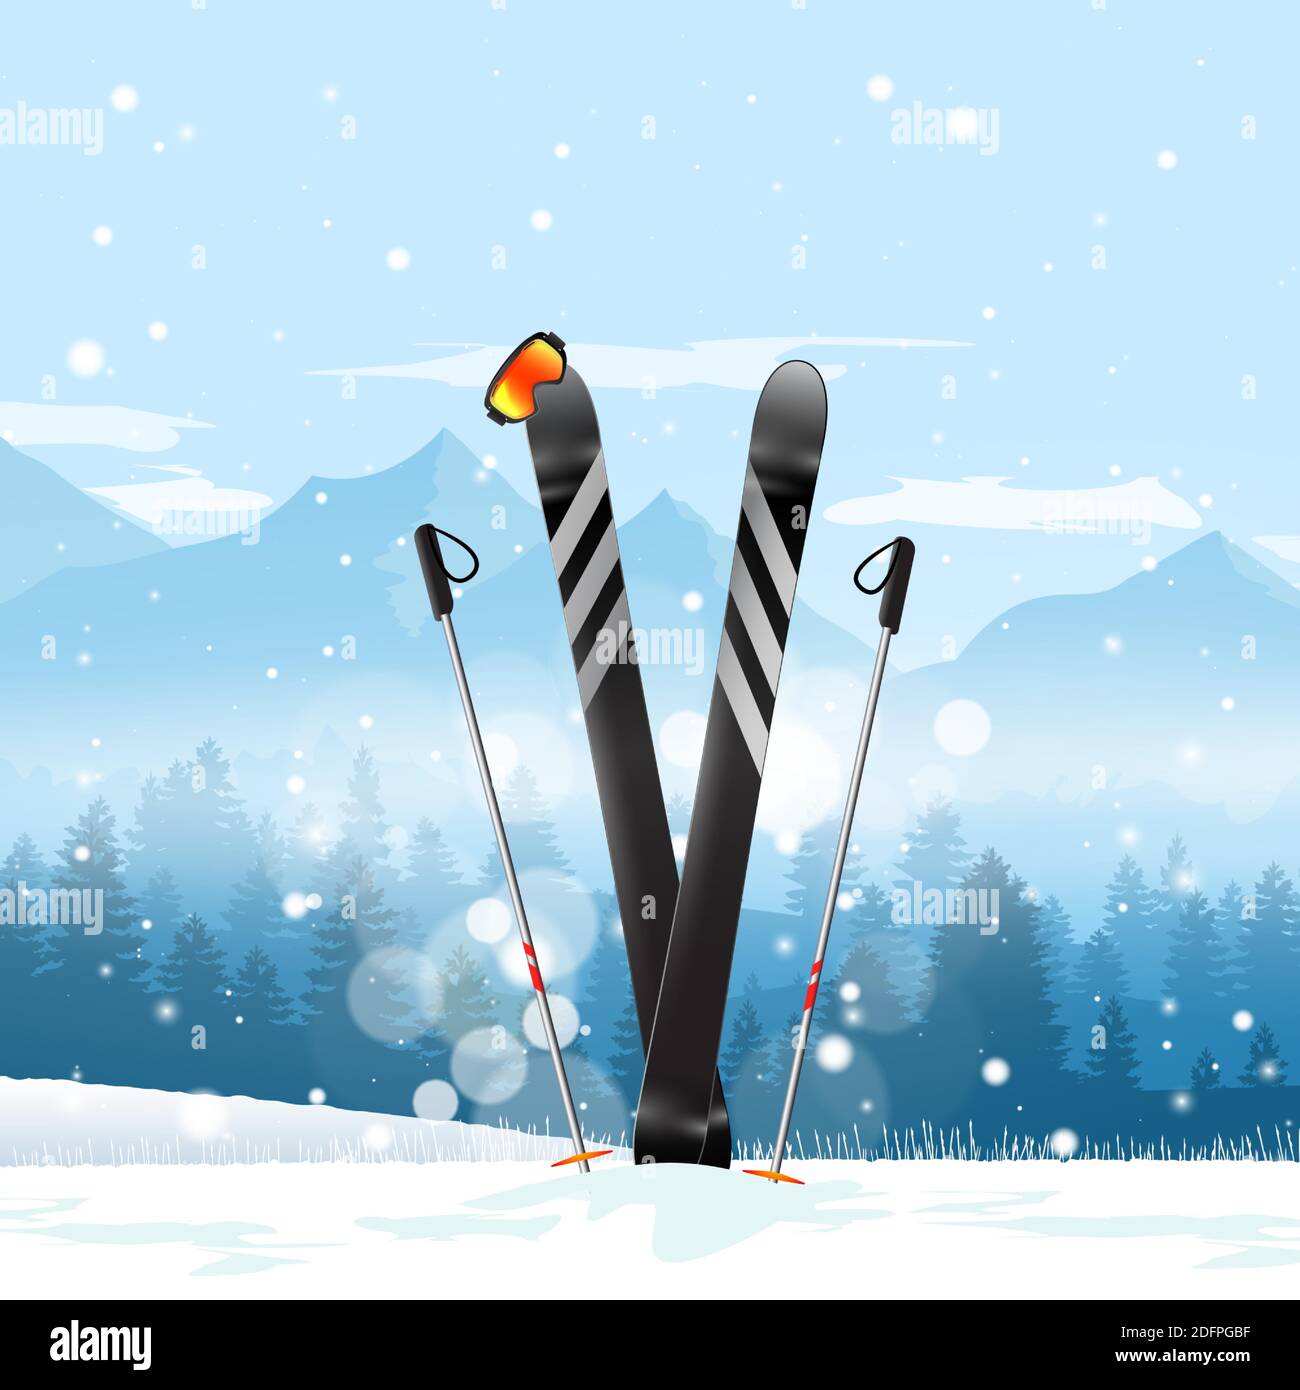 Pair of cross skis in snow. Ski winter mountain landscape background. Vector illustration. Stock Vector